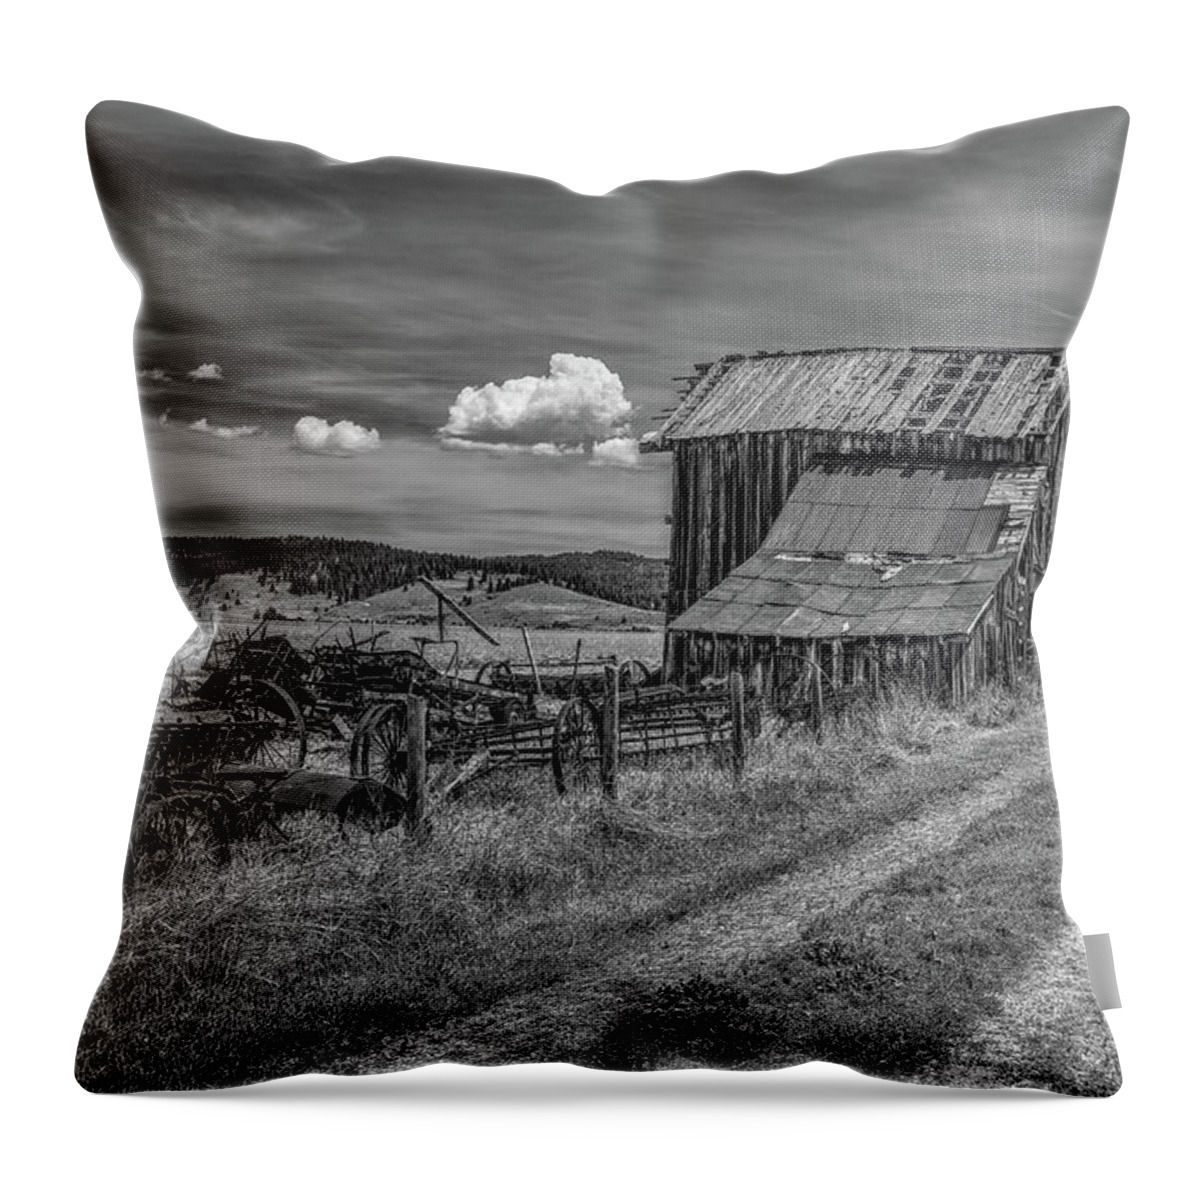 Farm Throw Pillow featuring the photograph Roseberry Farm by Richard J Cassato